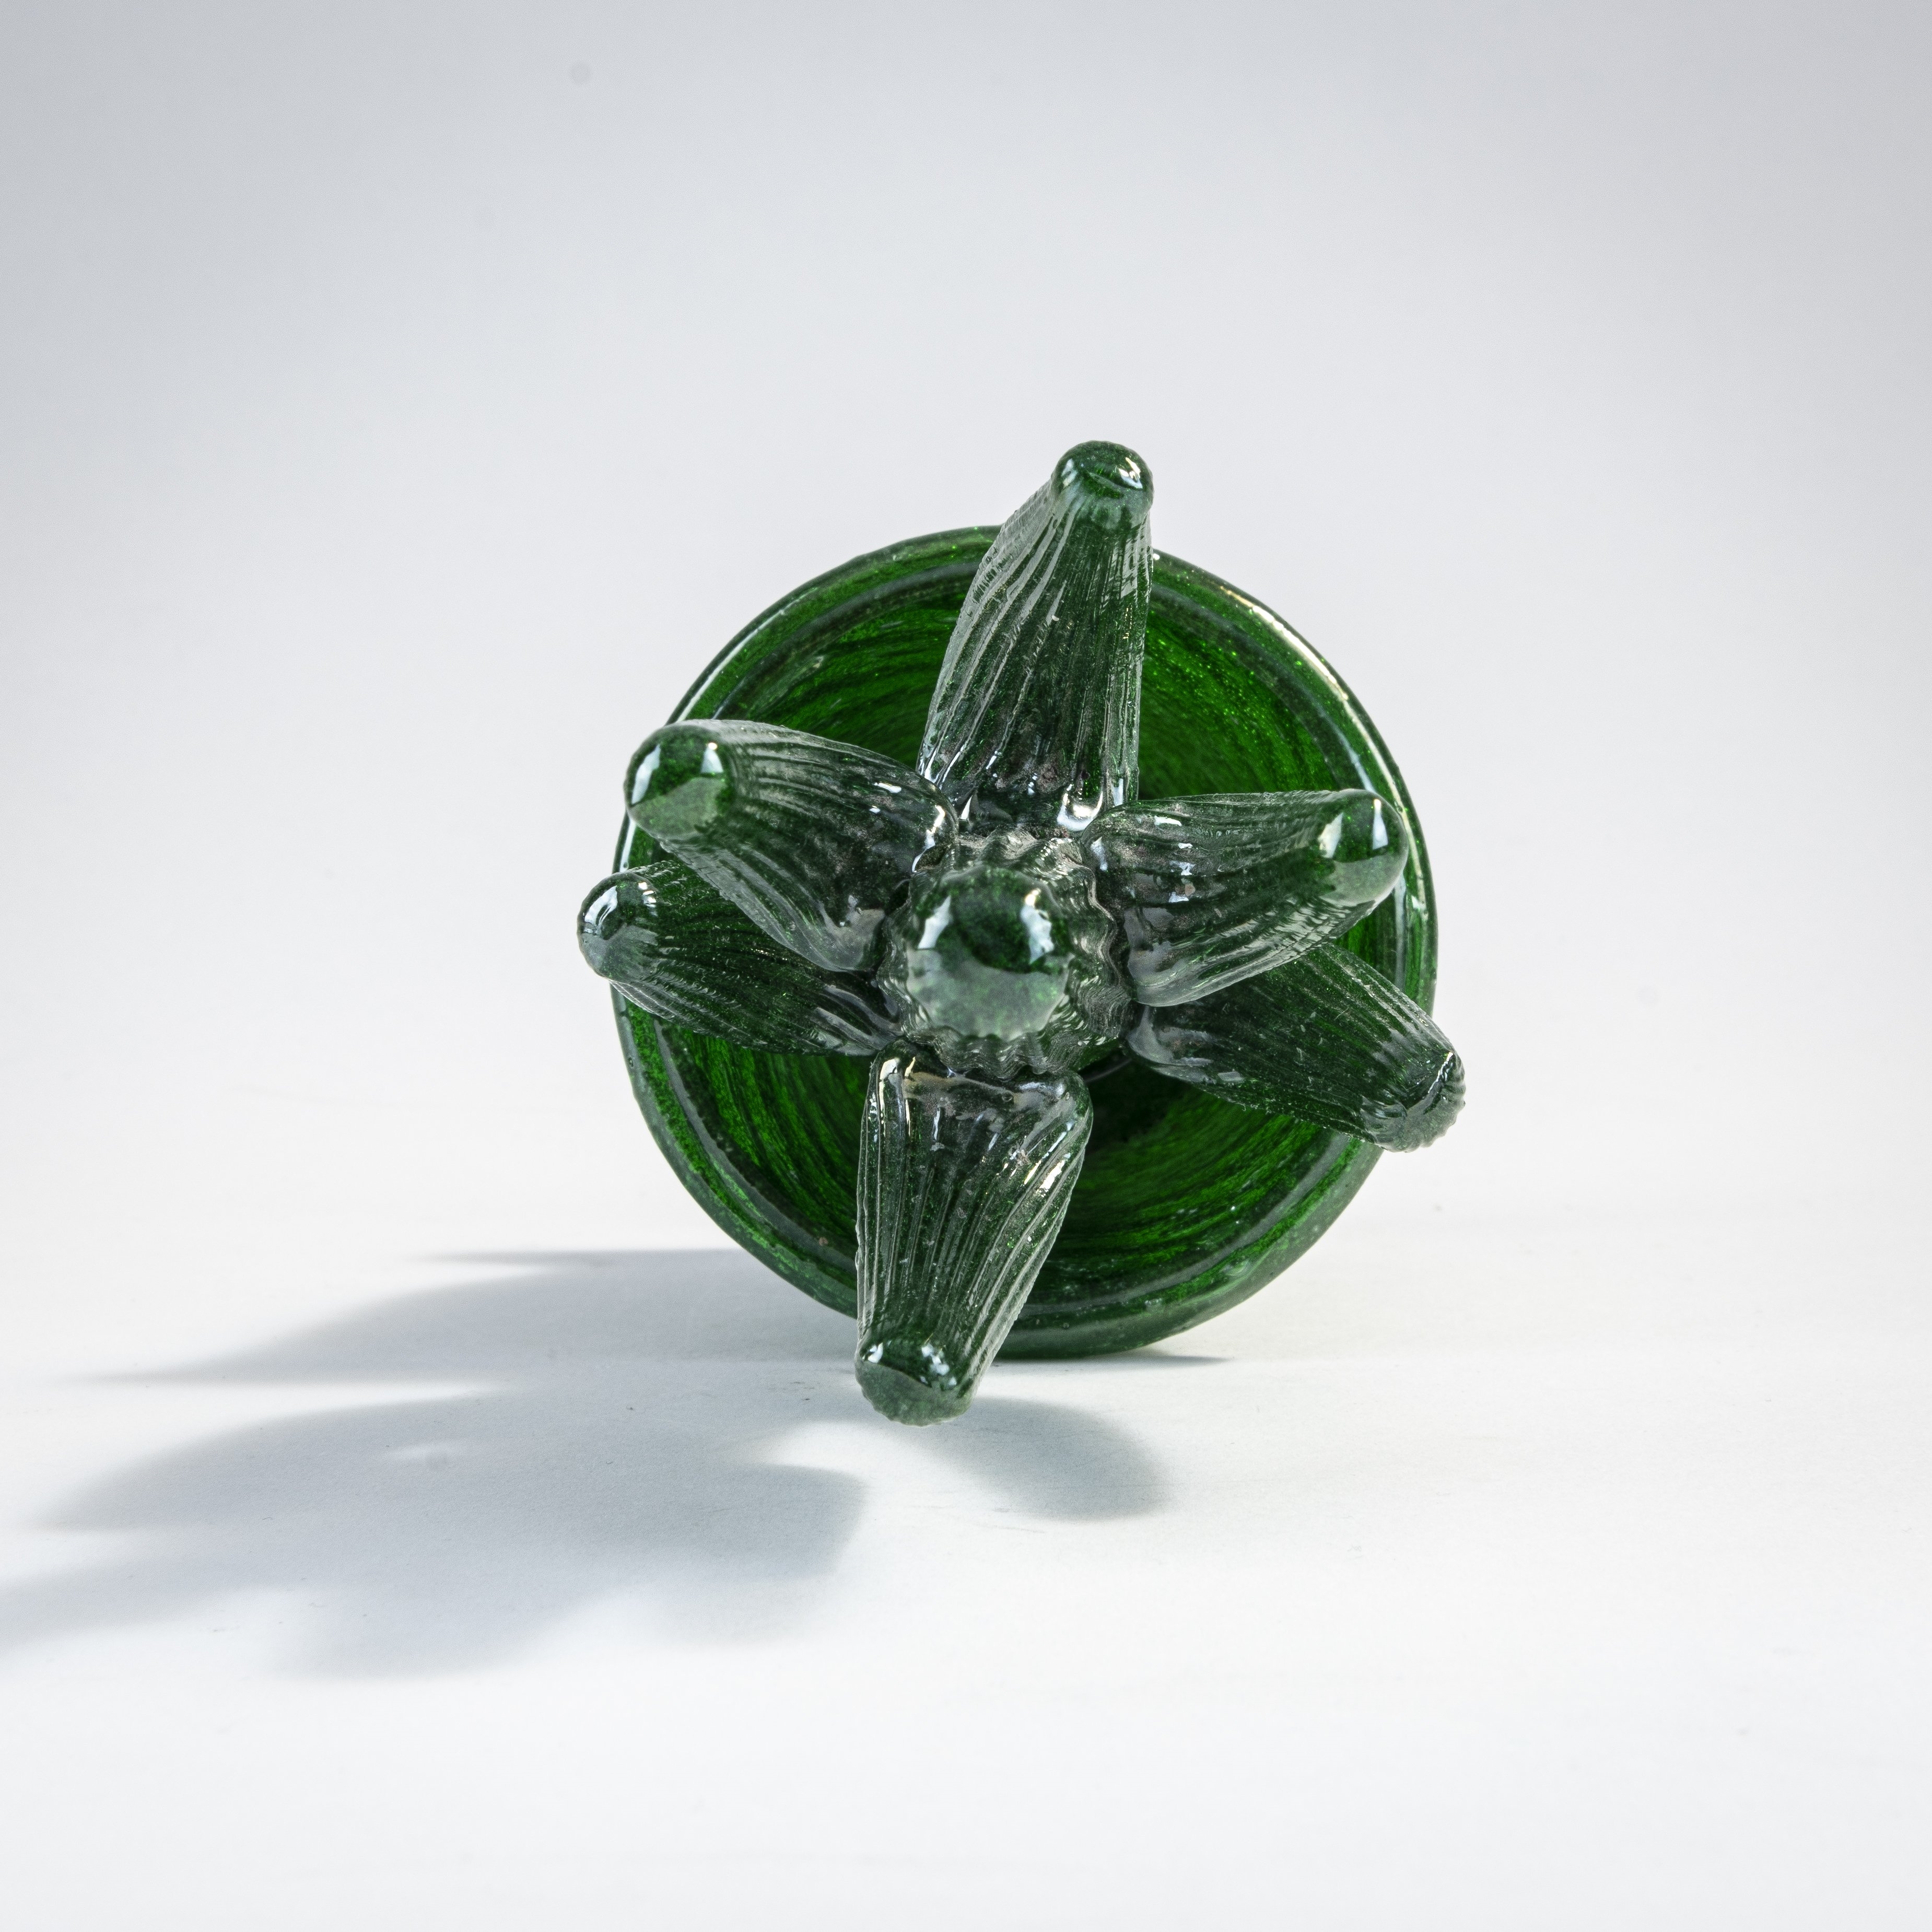 Artwork by Flavio Poli, Pianta grassa, Made of green glass